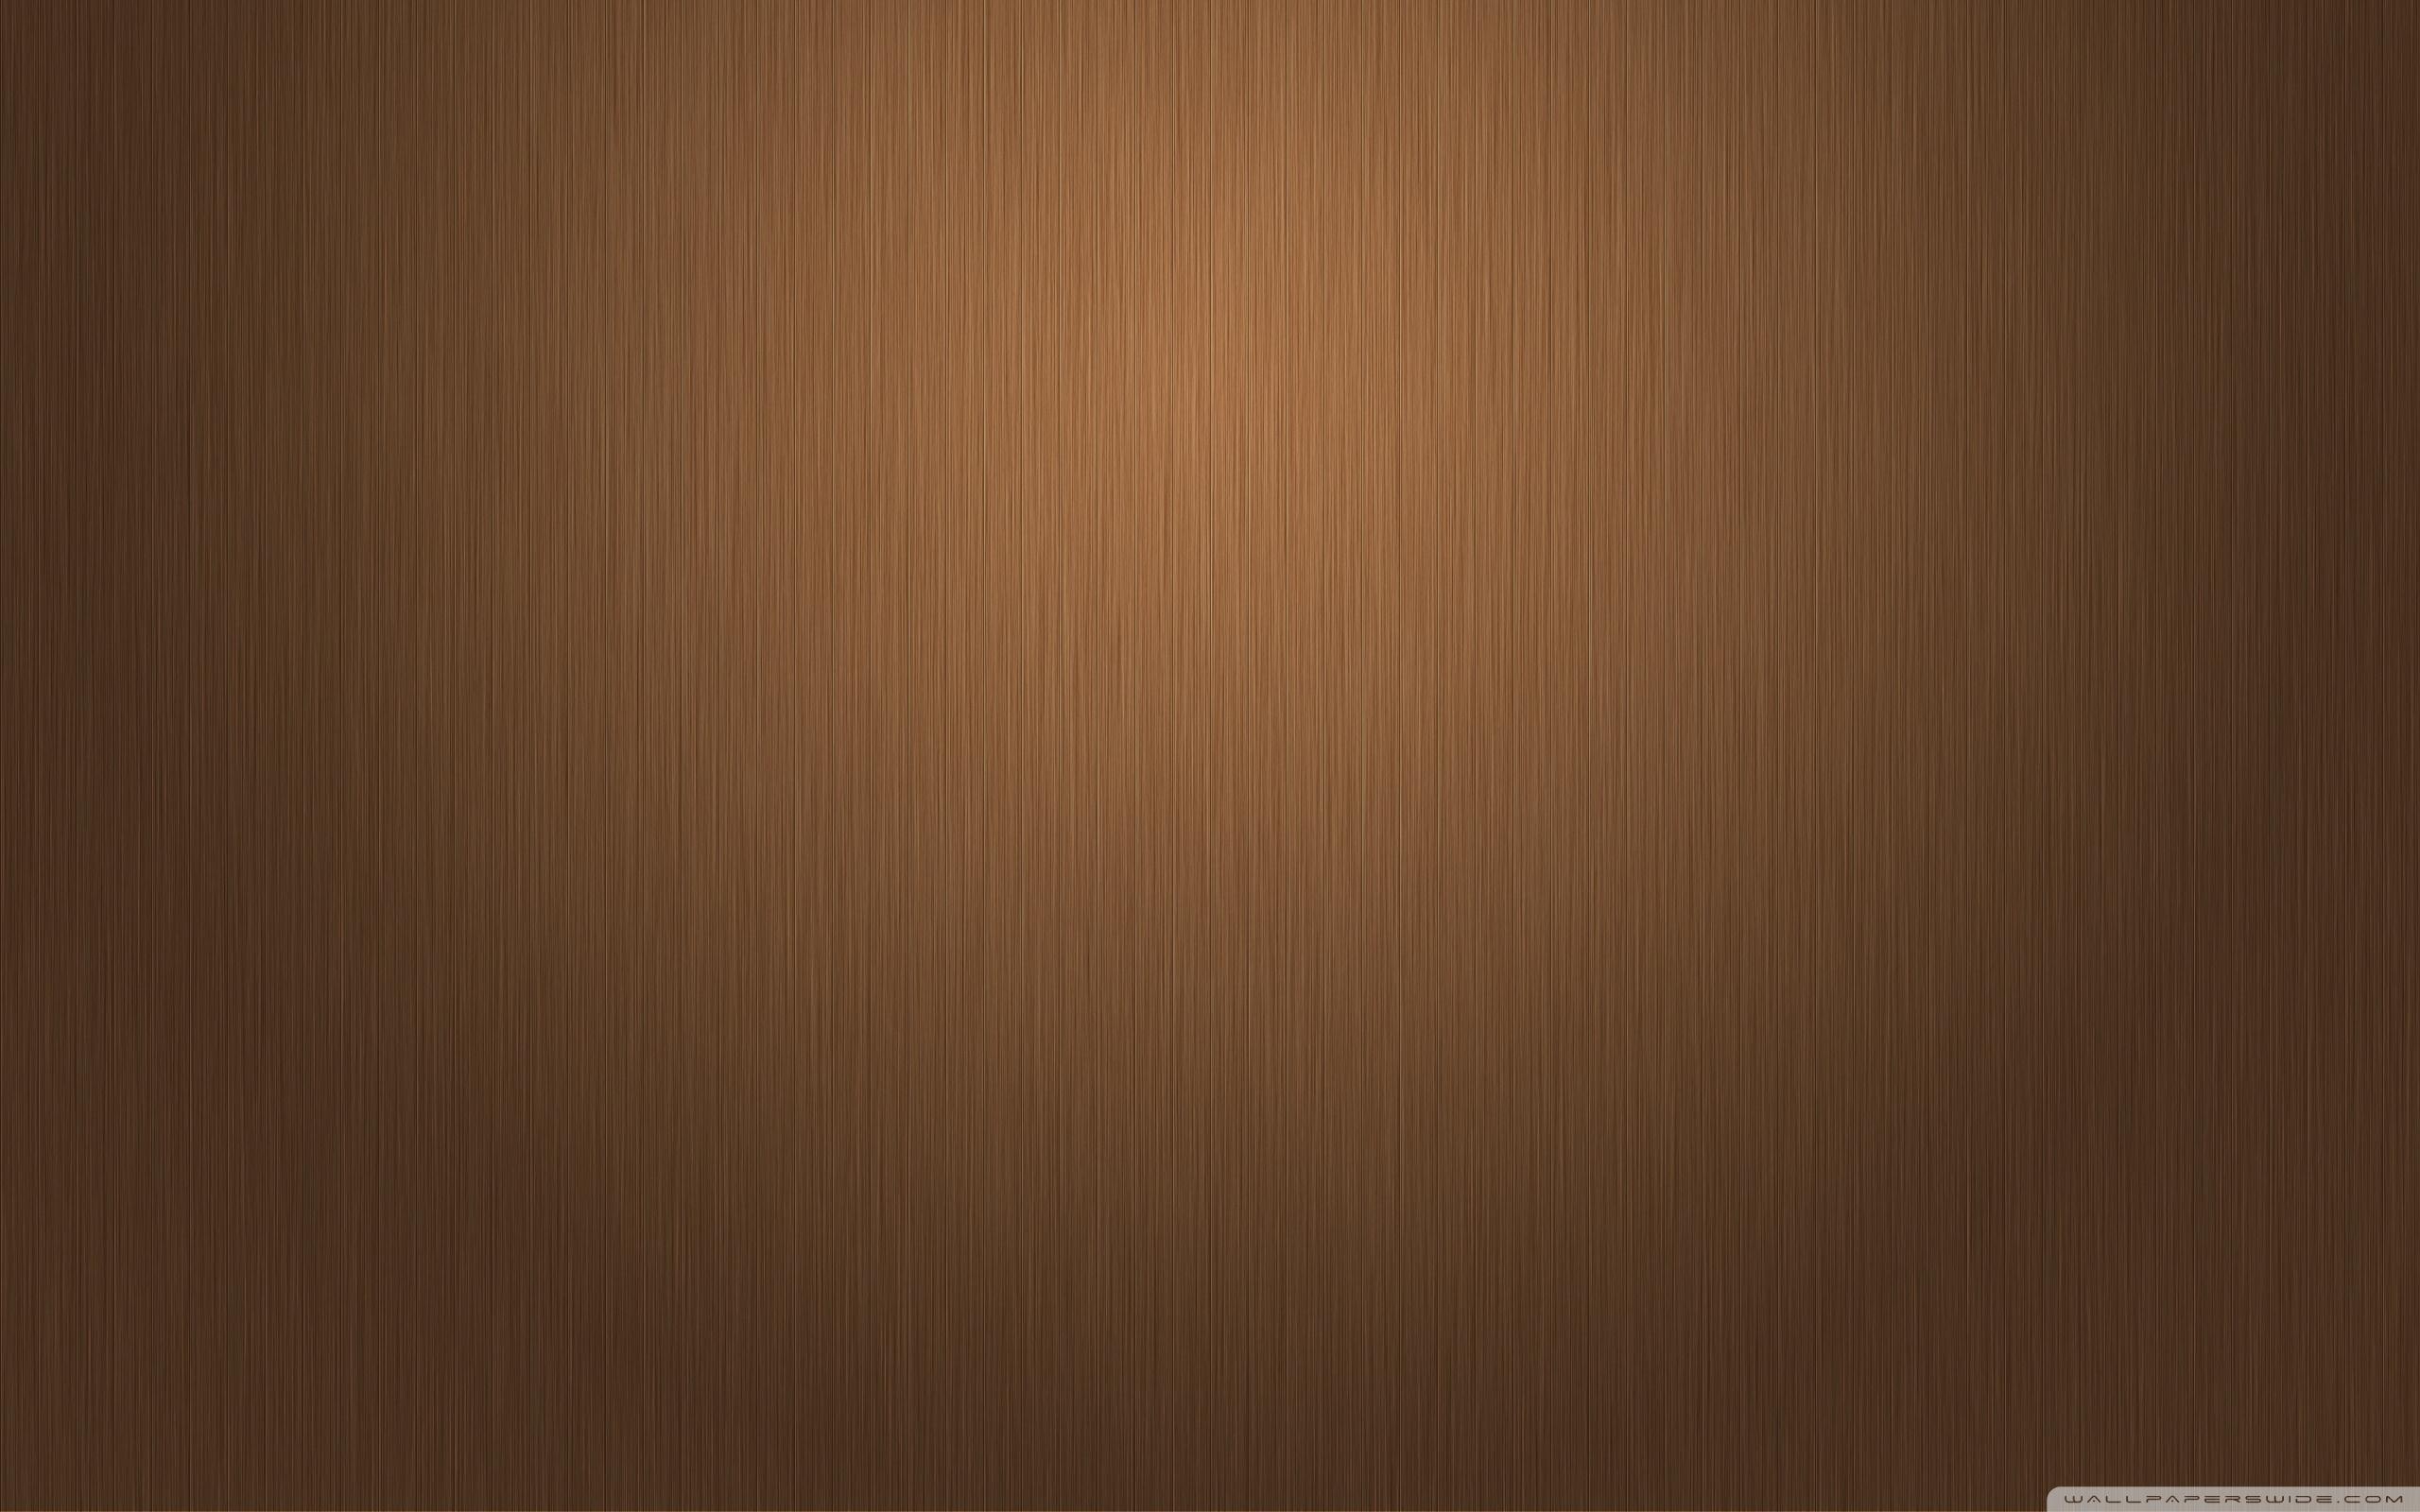 Wood Texture ❤ 4K HD Desktop Wallpaper for 4K Ultra HD TV • Dual